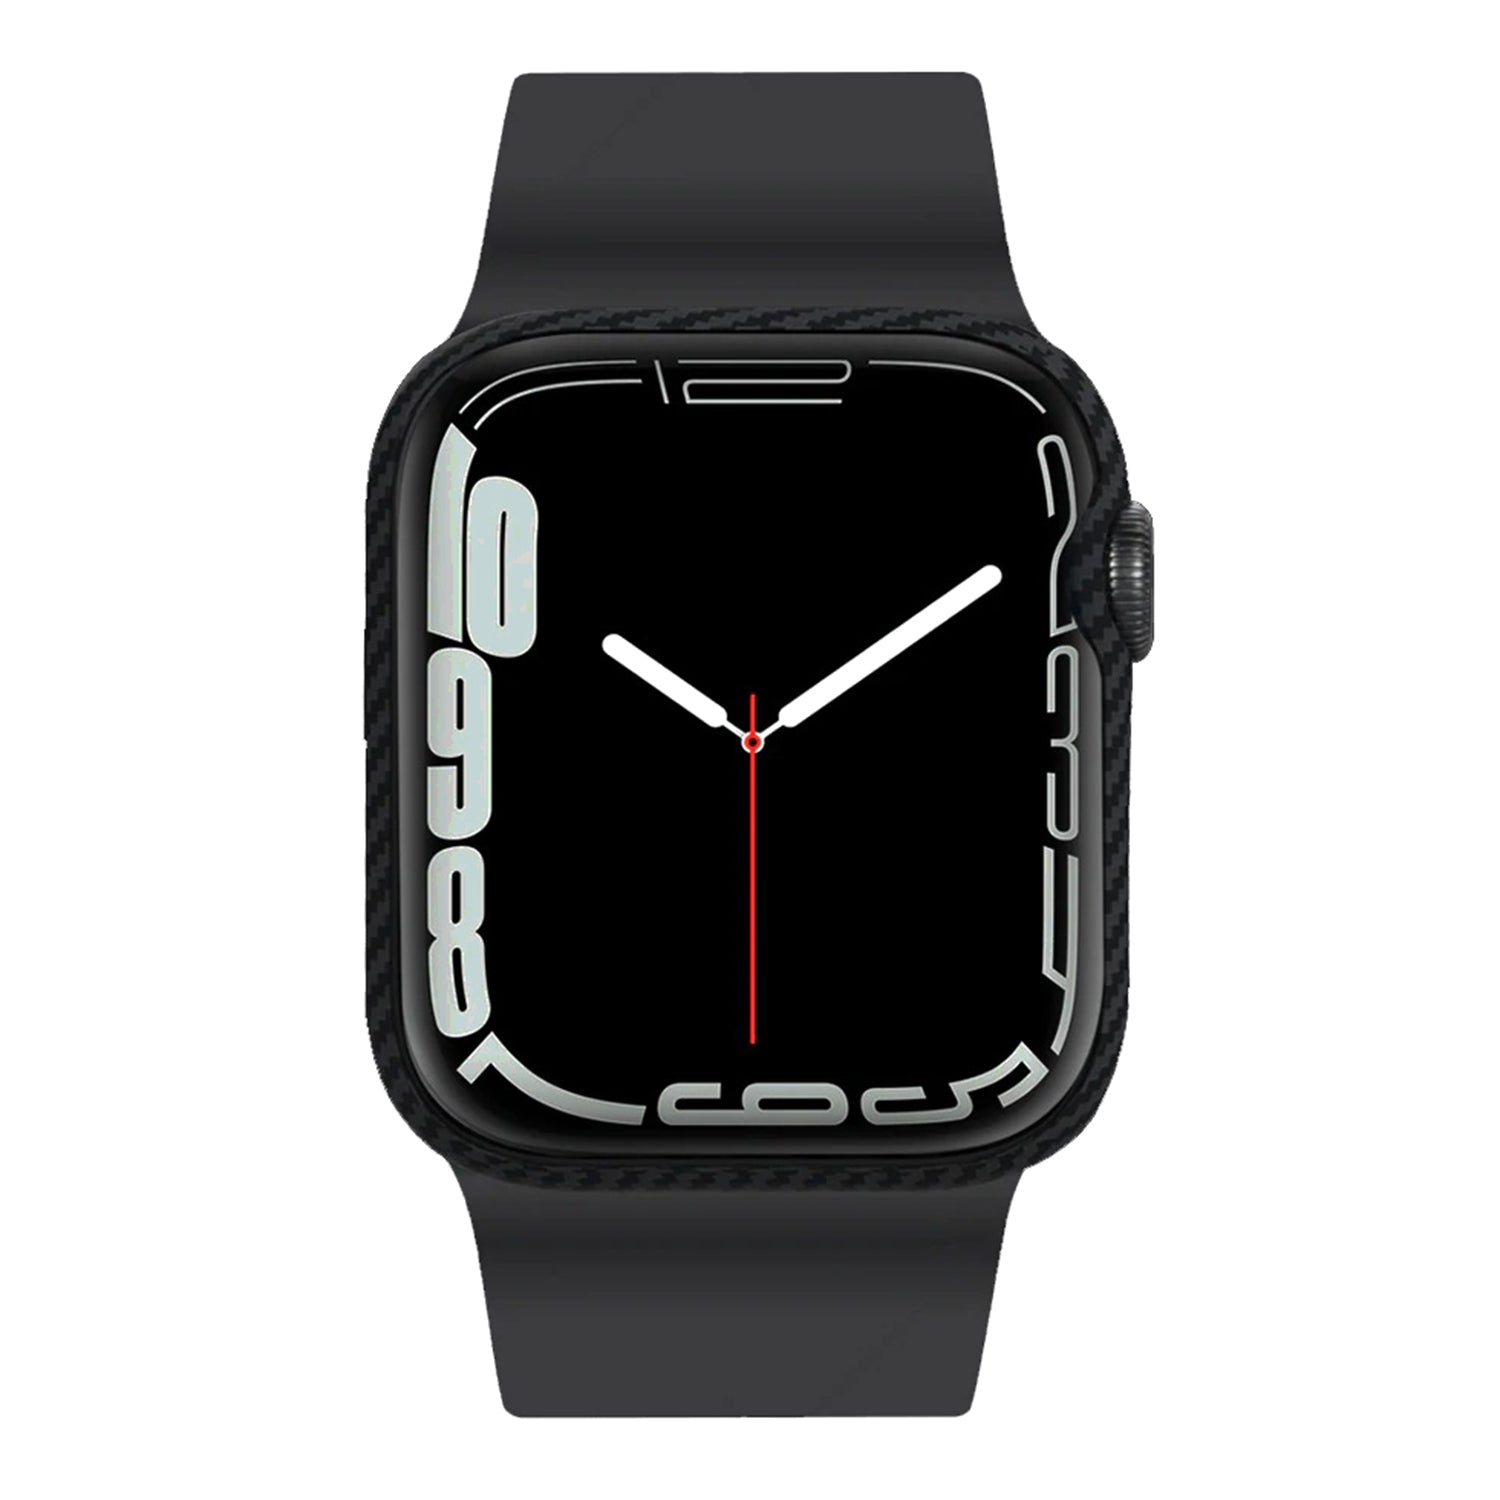 PITAKA Air Case for Apple Watch Series 7 41mm Default PITAKA 